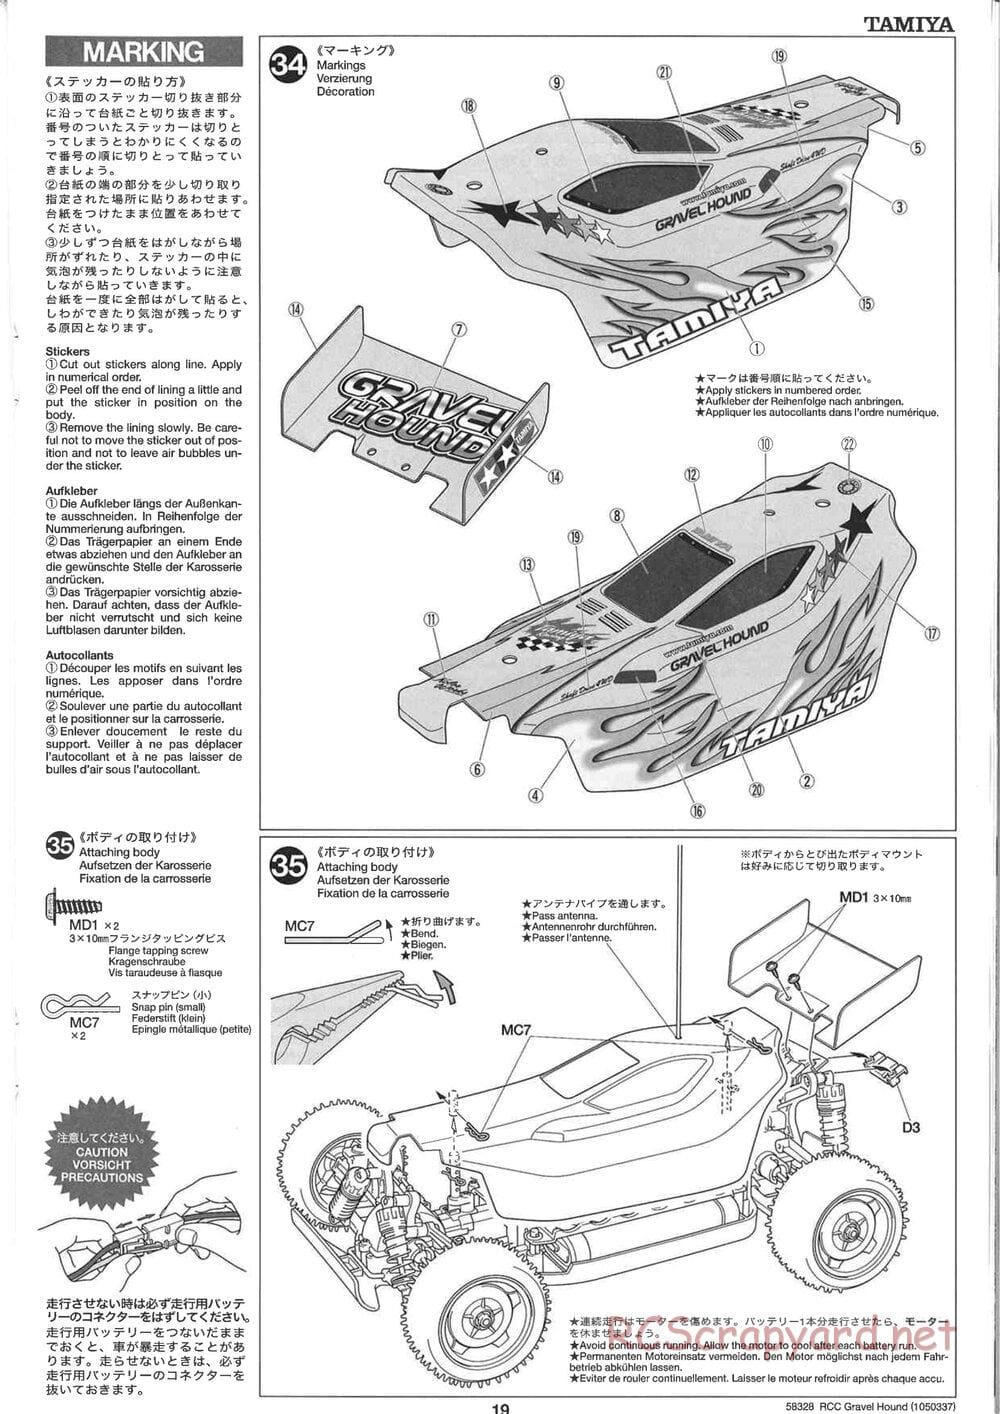 Tamiya - Gravel Hound Chassis - Manual - Page 19